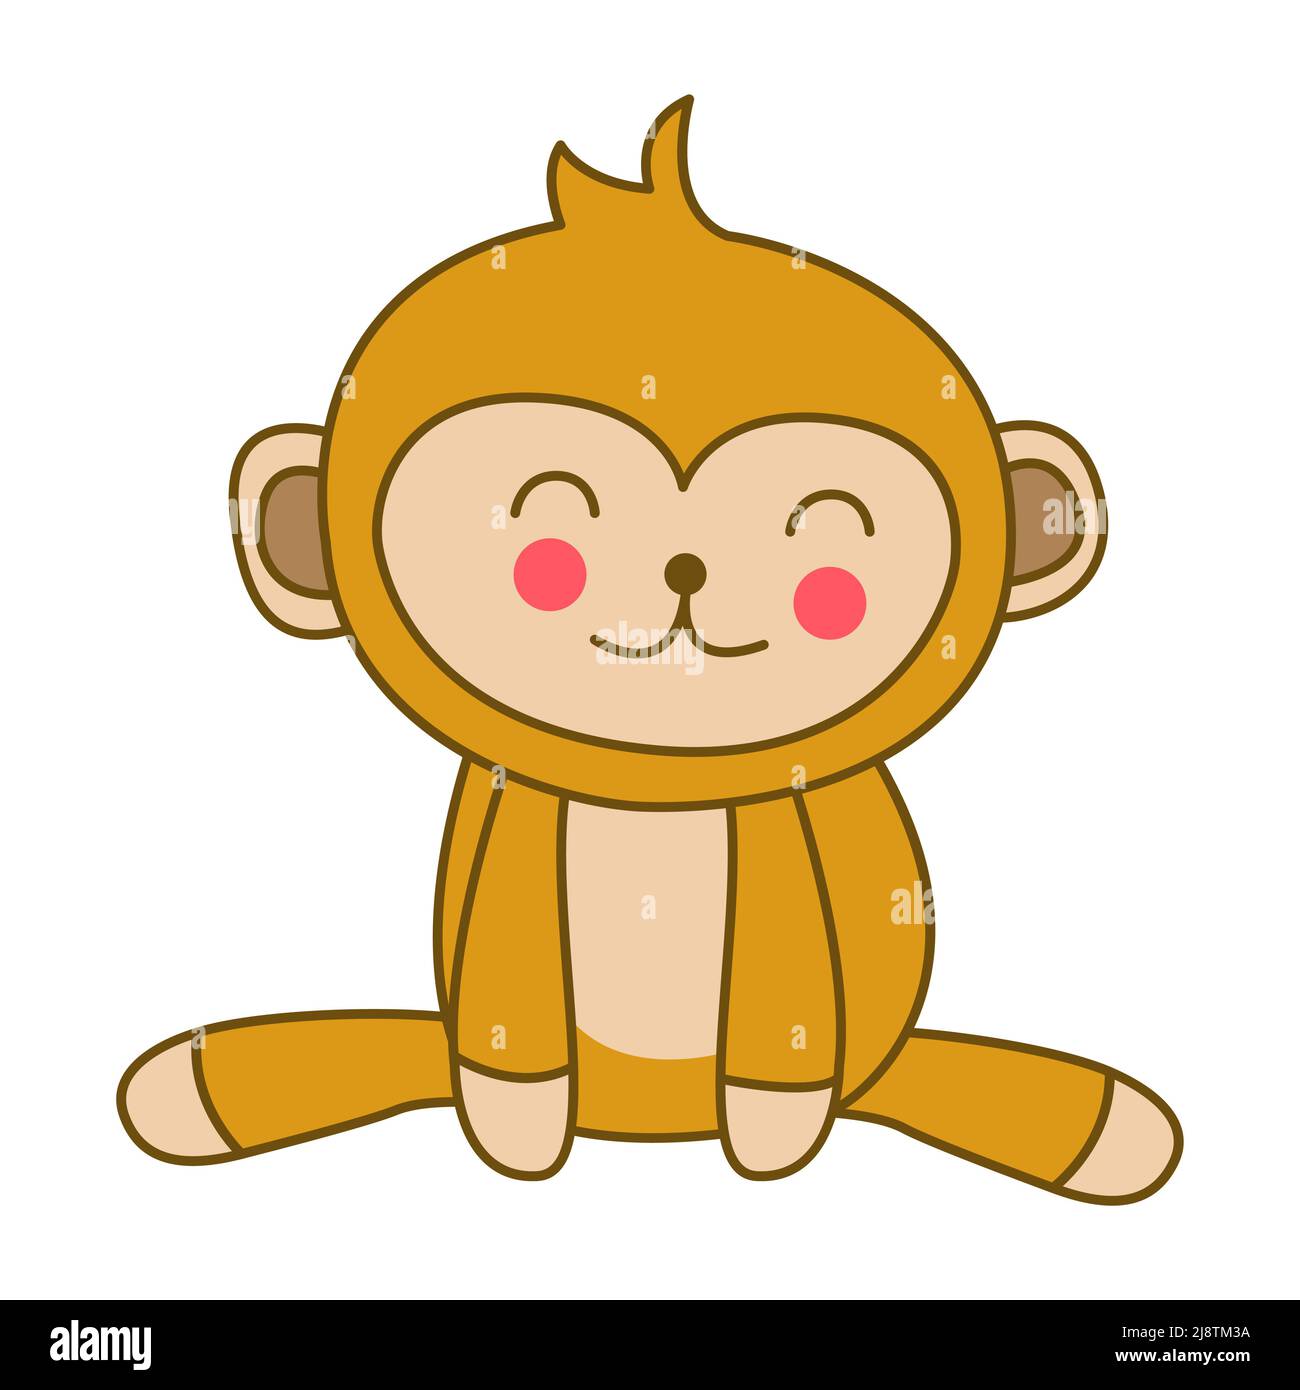 clip art of monkey with cartoon design,vector illustration Stock Vector